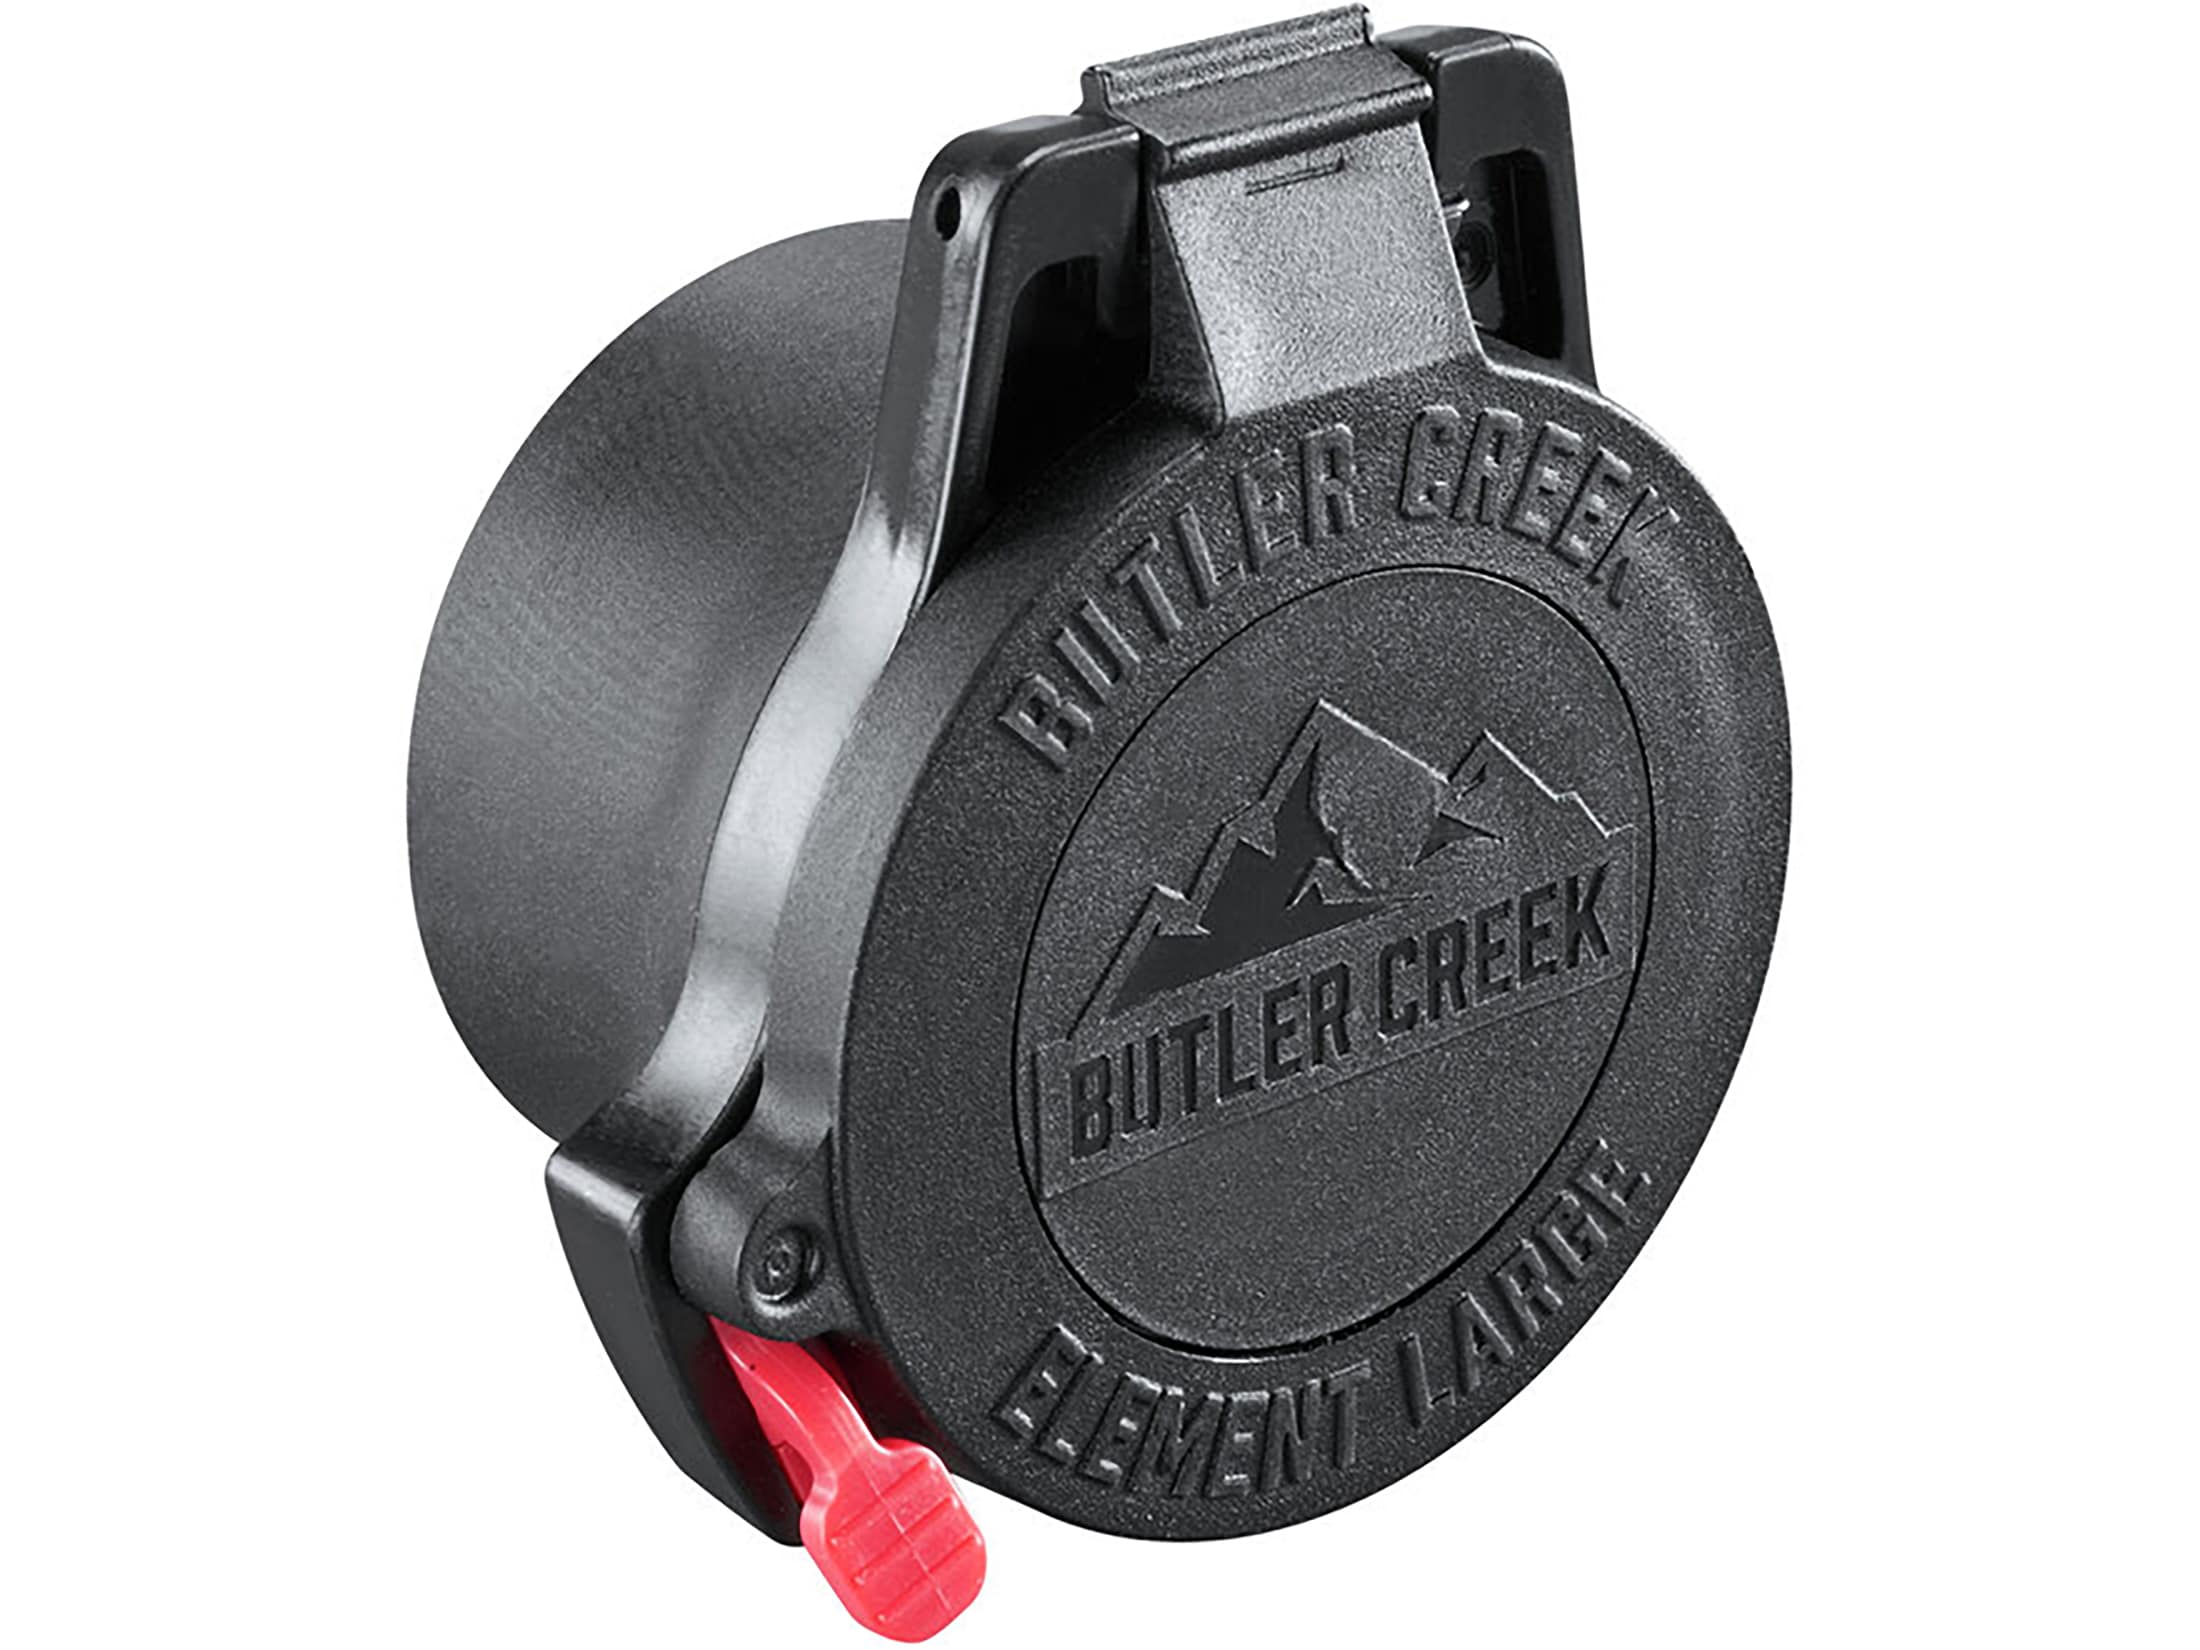 Butler Creek Multiflex Flip Open Rifle Scope OBJECTIVE Lens Flip up Cap Cover 